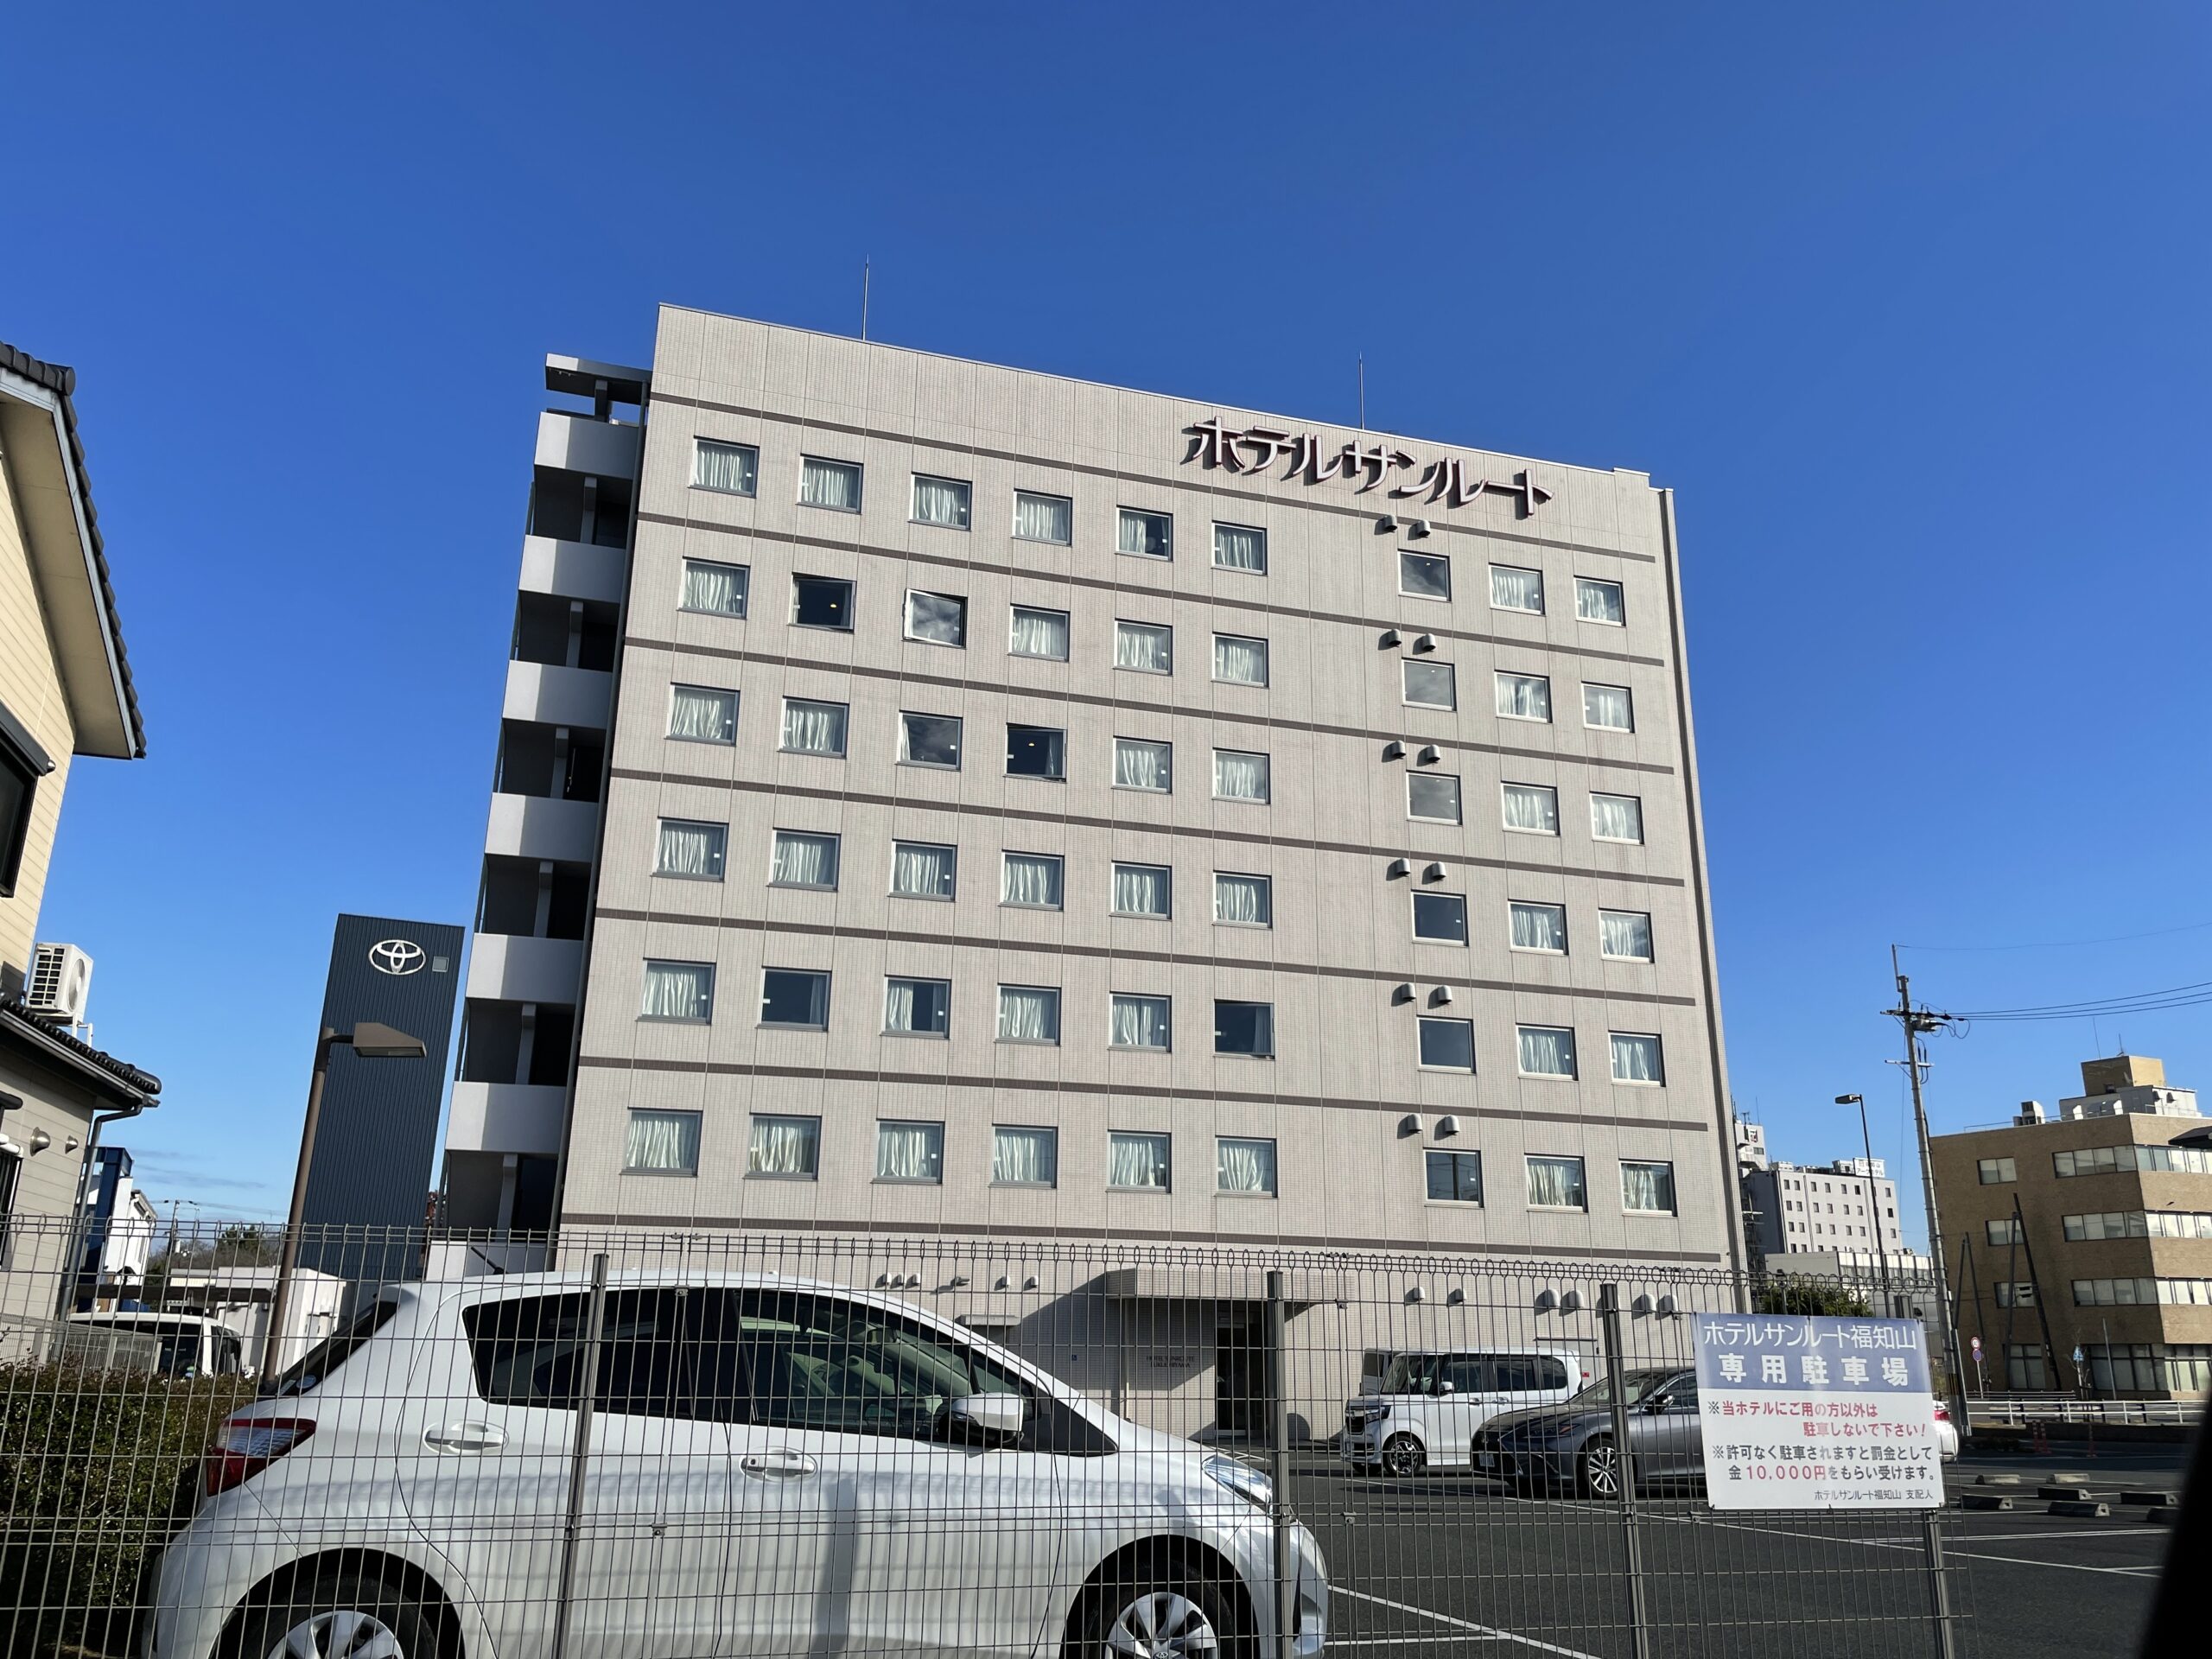 Hotel Sunroute in Fukuchiyama